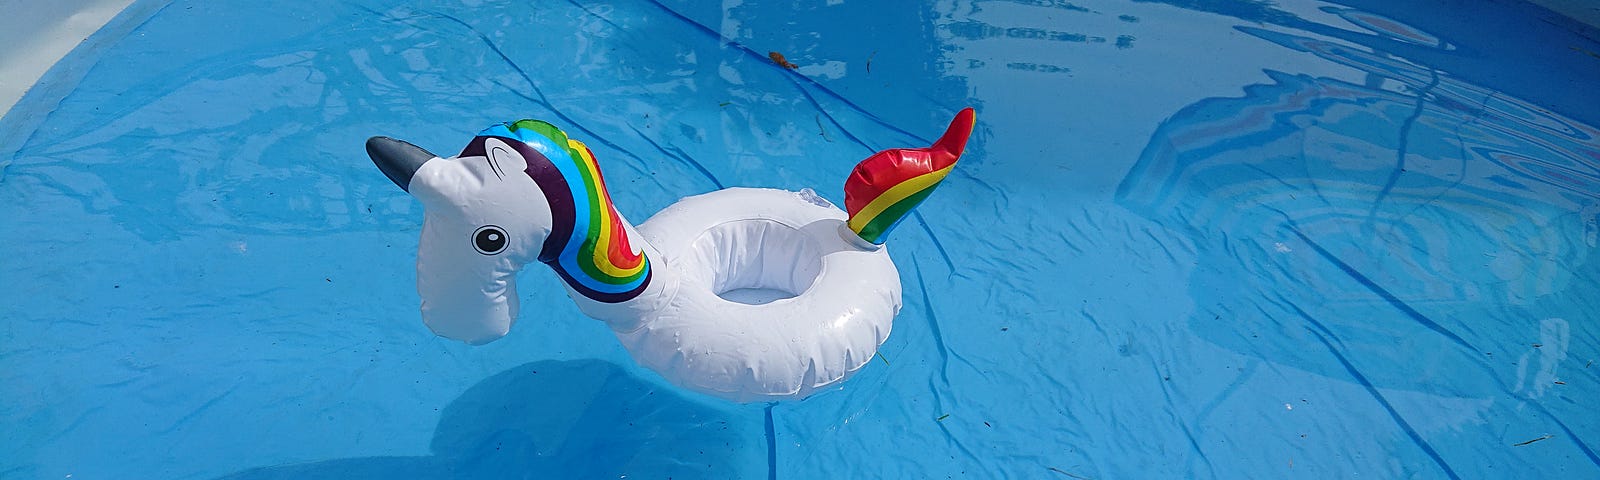 Inflatable unicorn in pool